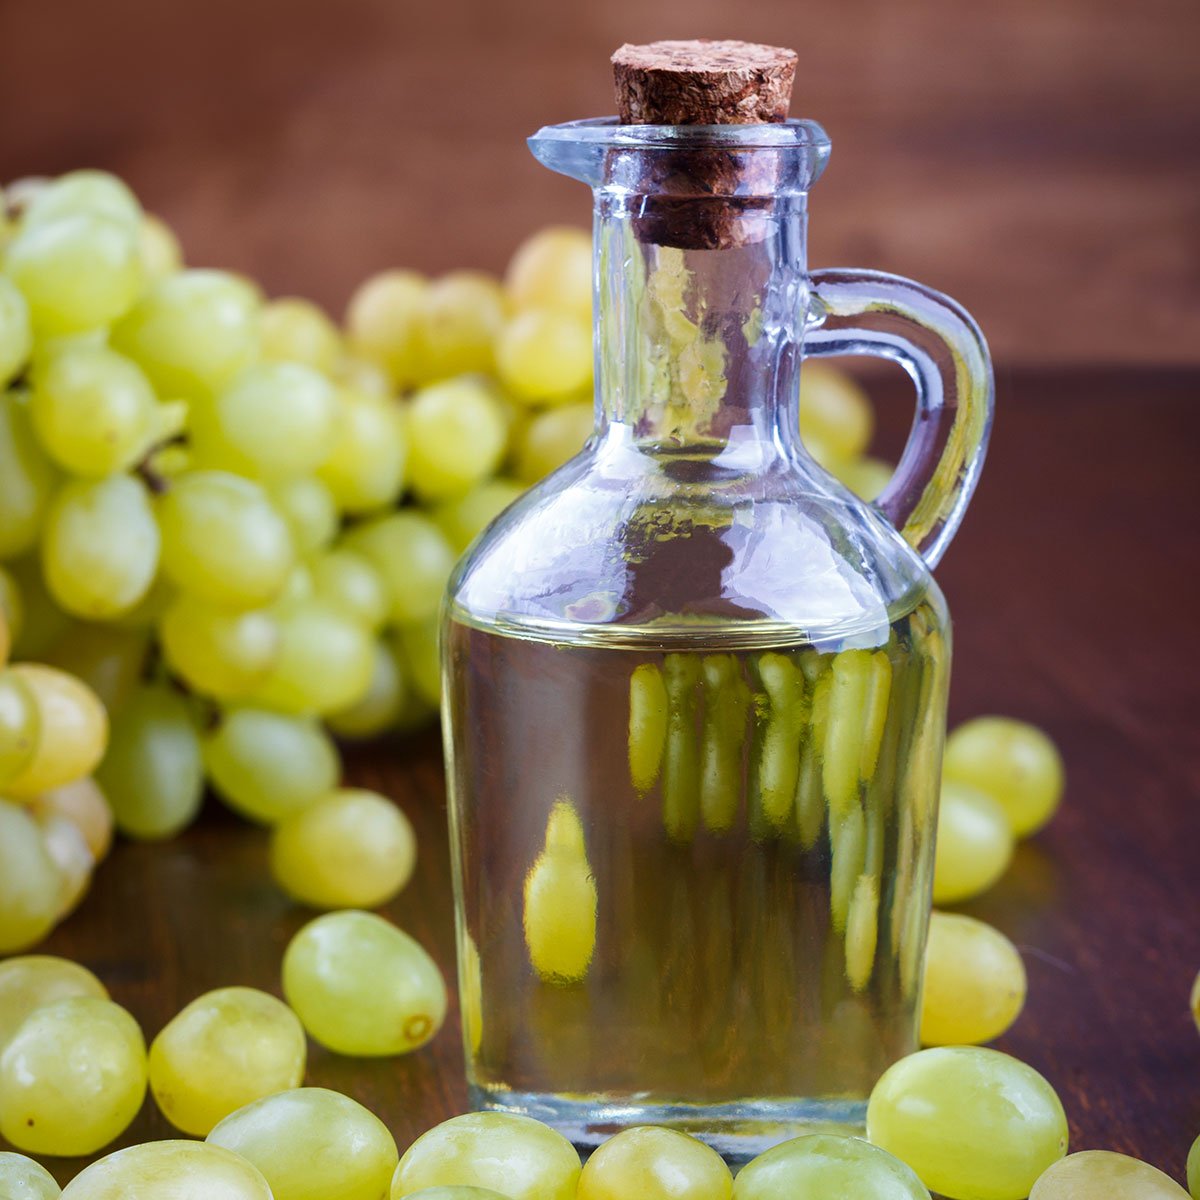 11 jenis cuka yang dapat dikonsumsi cuka anggur putih